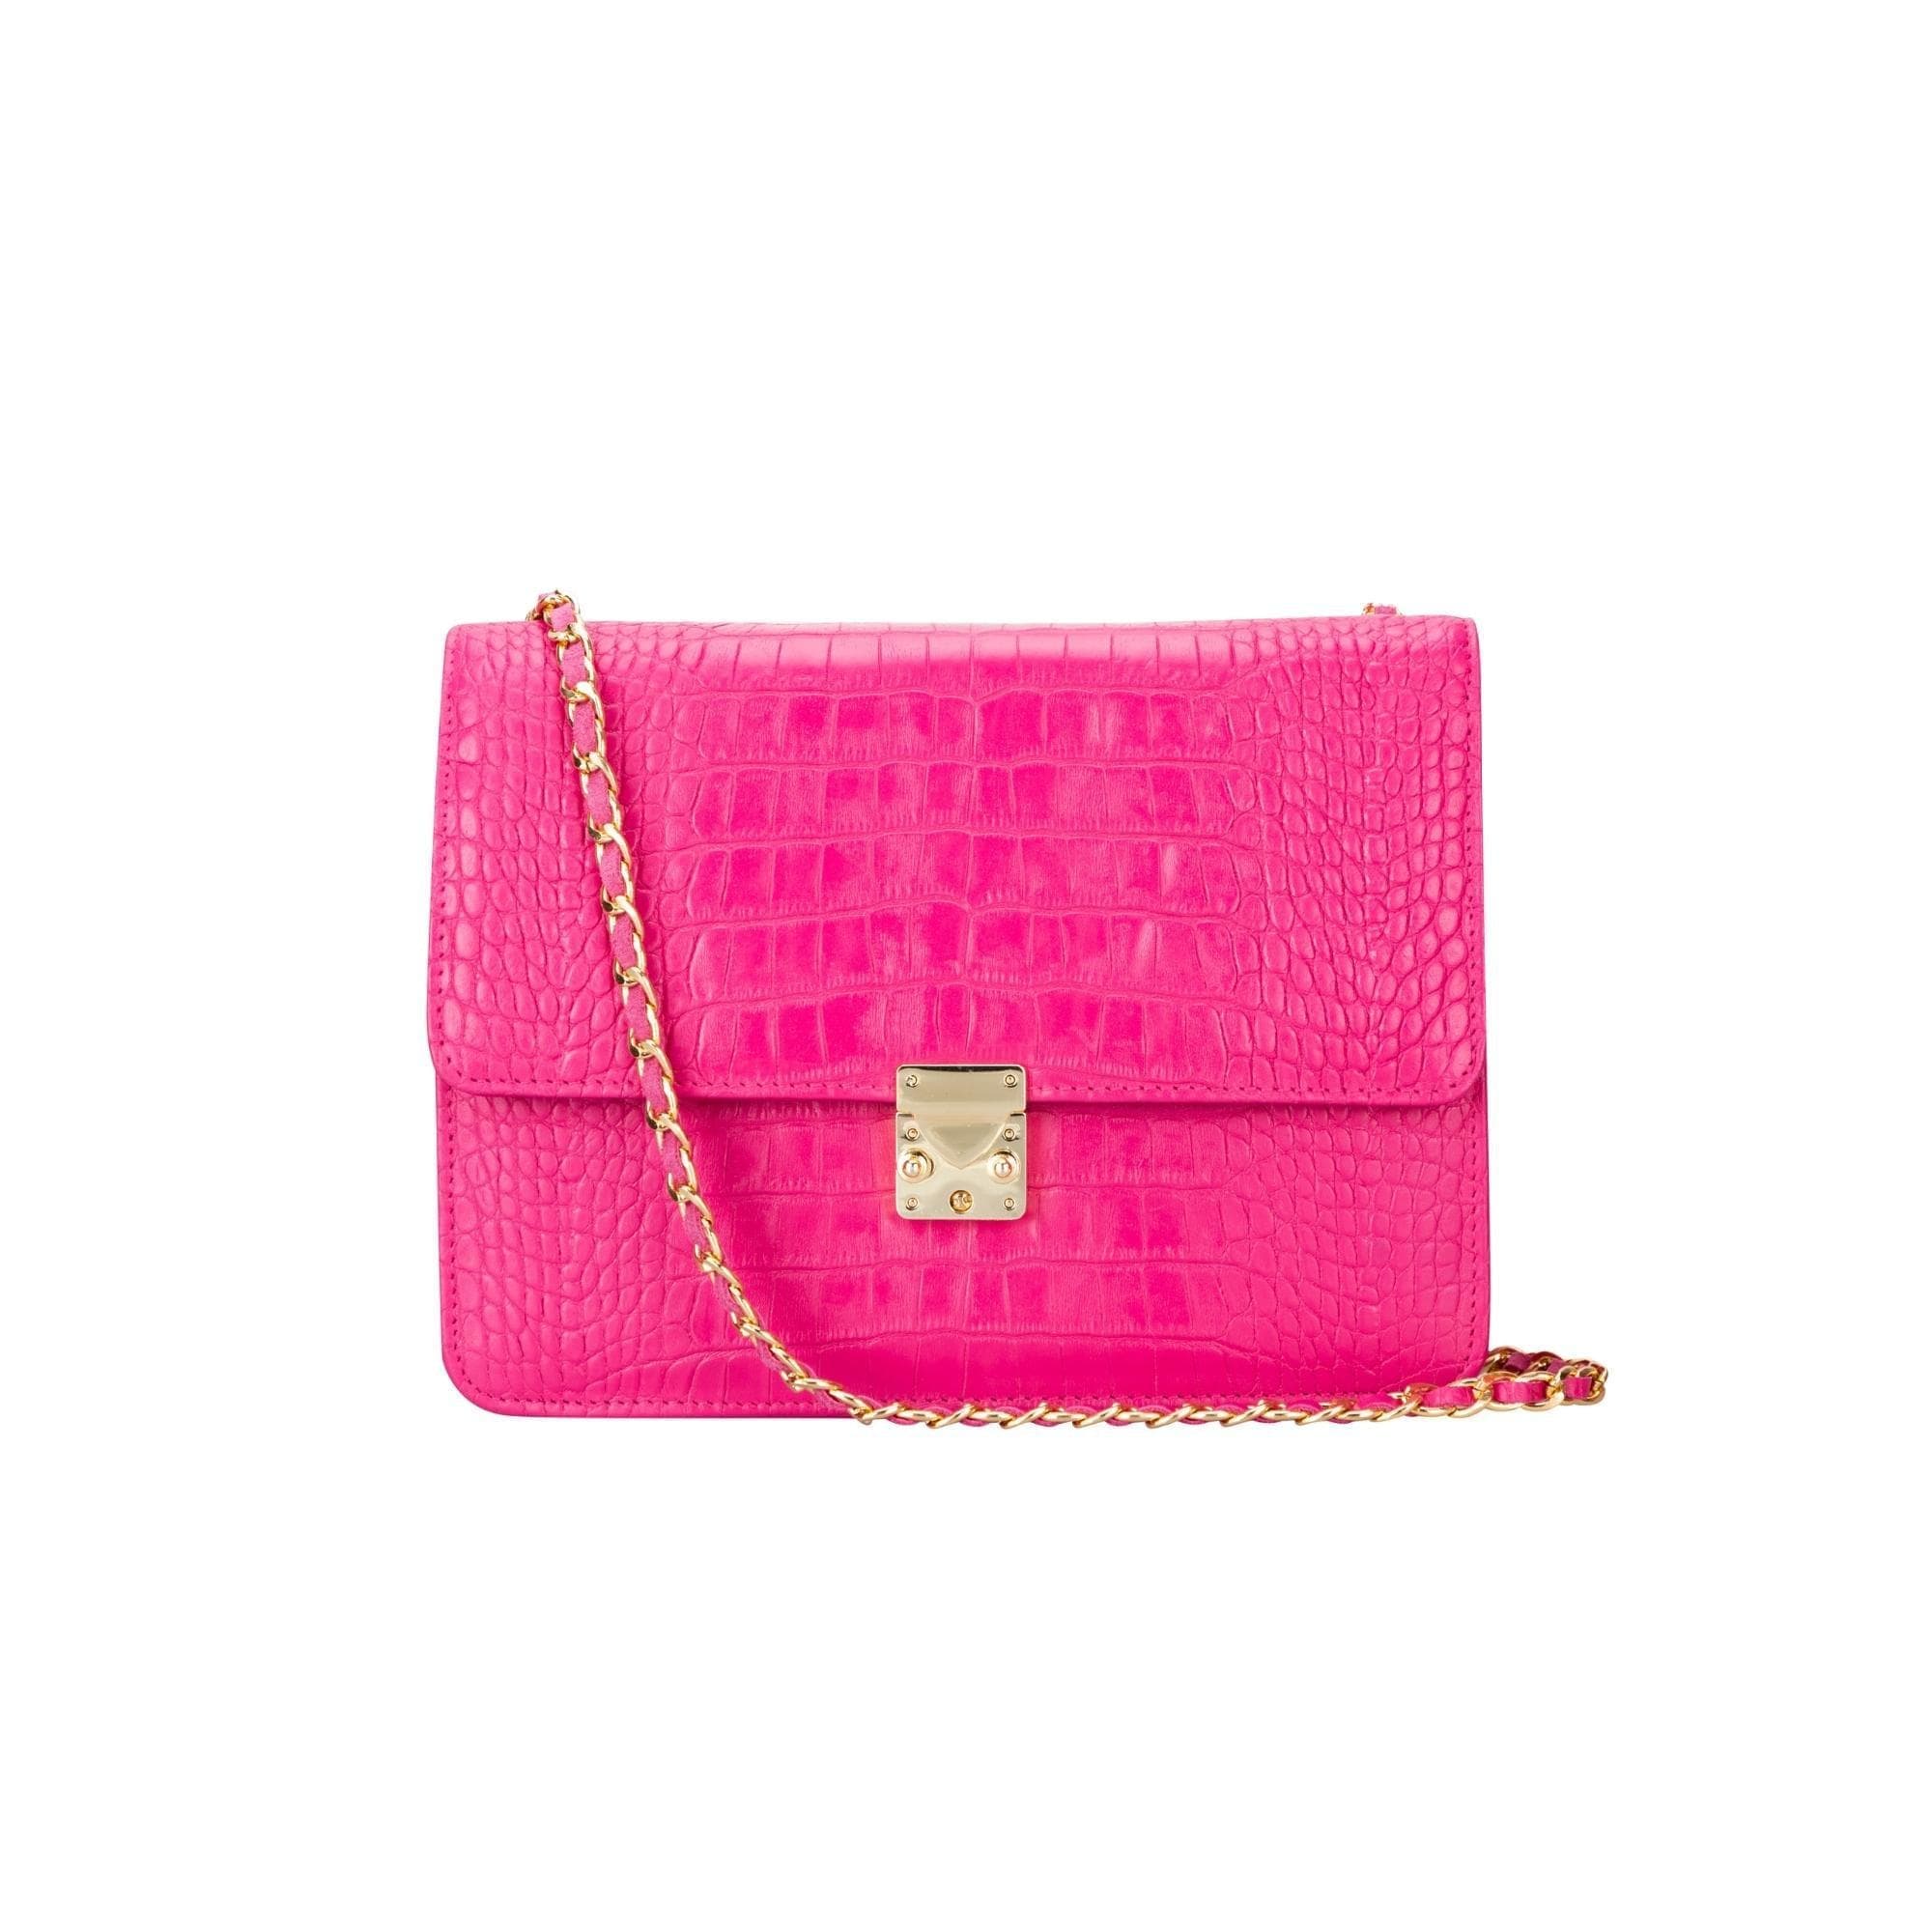 Oxi Geniune Leather Women’s Bag Cerise Pink Croc Bouletta LTD